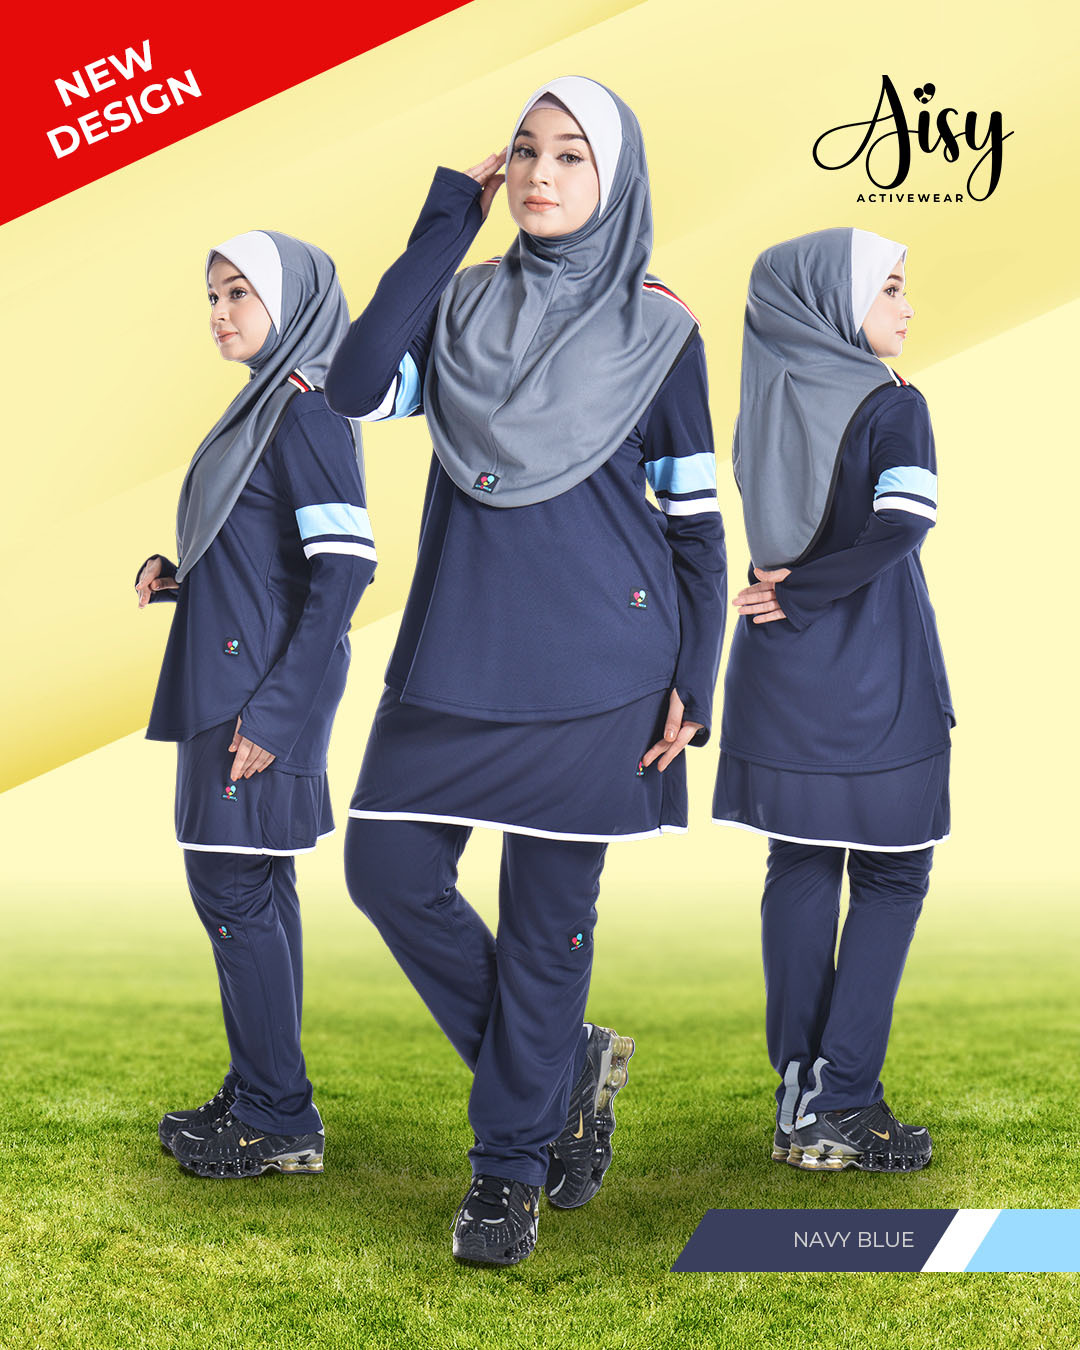 Katalog Aisy Activewear A(4) Navy Blue